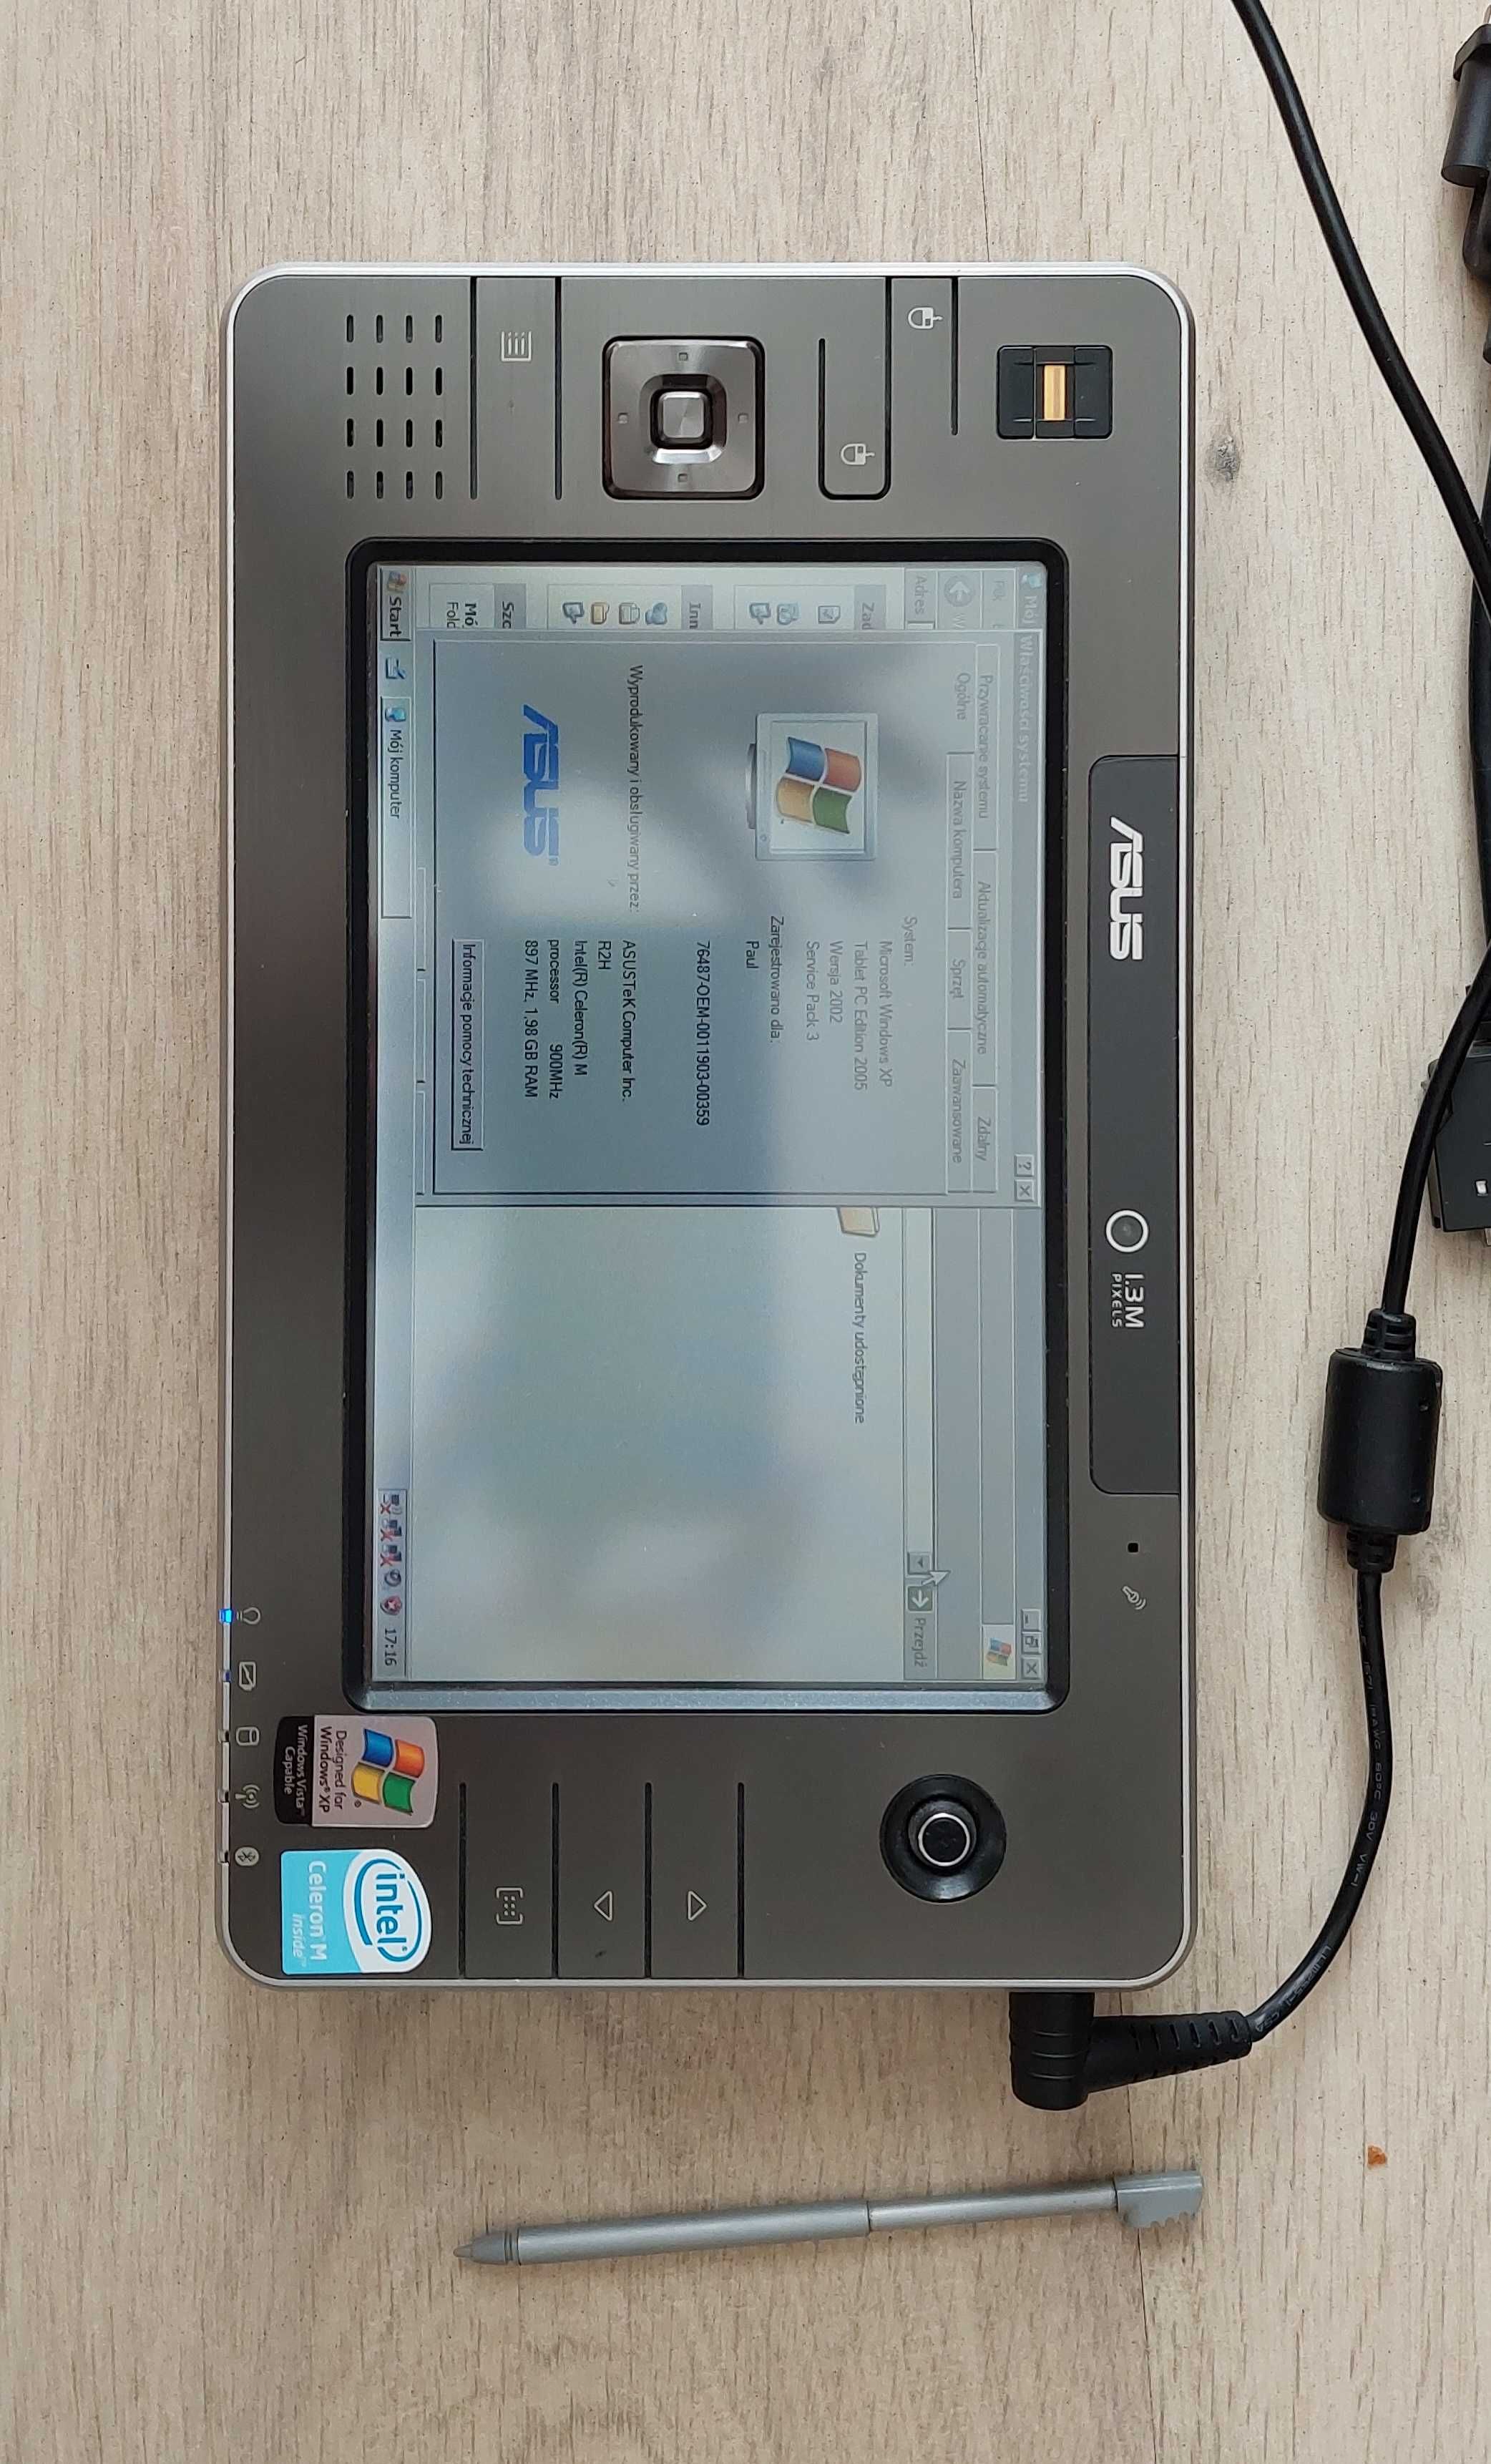 Asus R2H tablet generacji 1.1